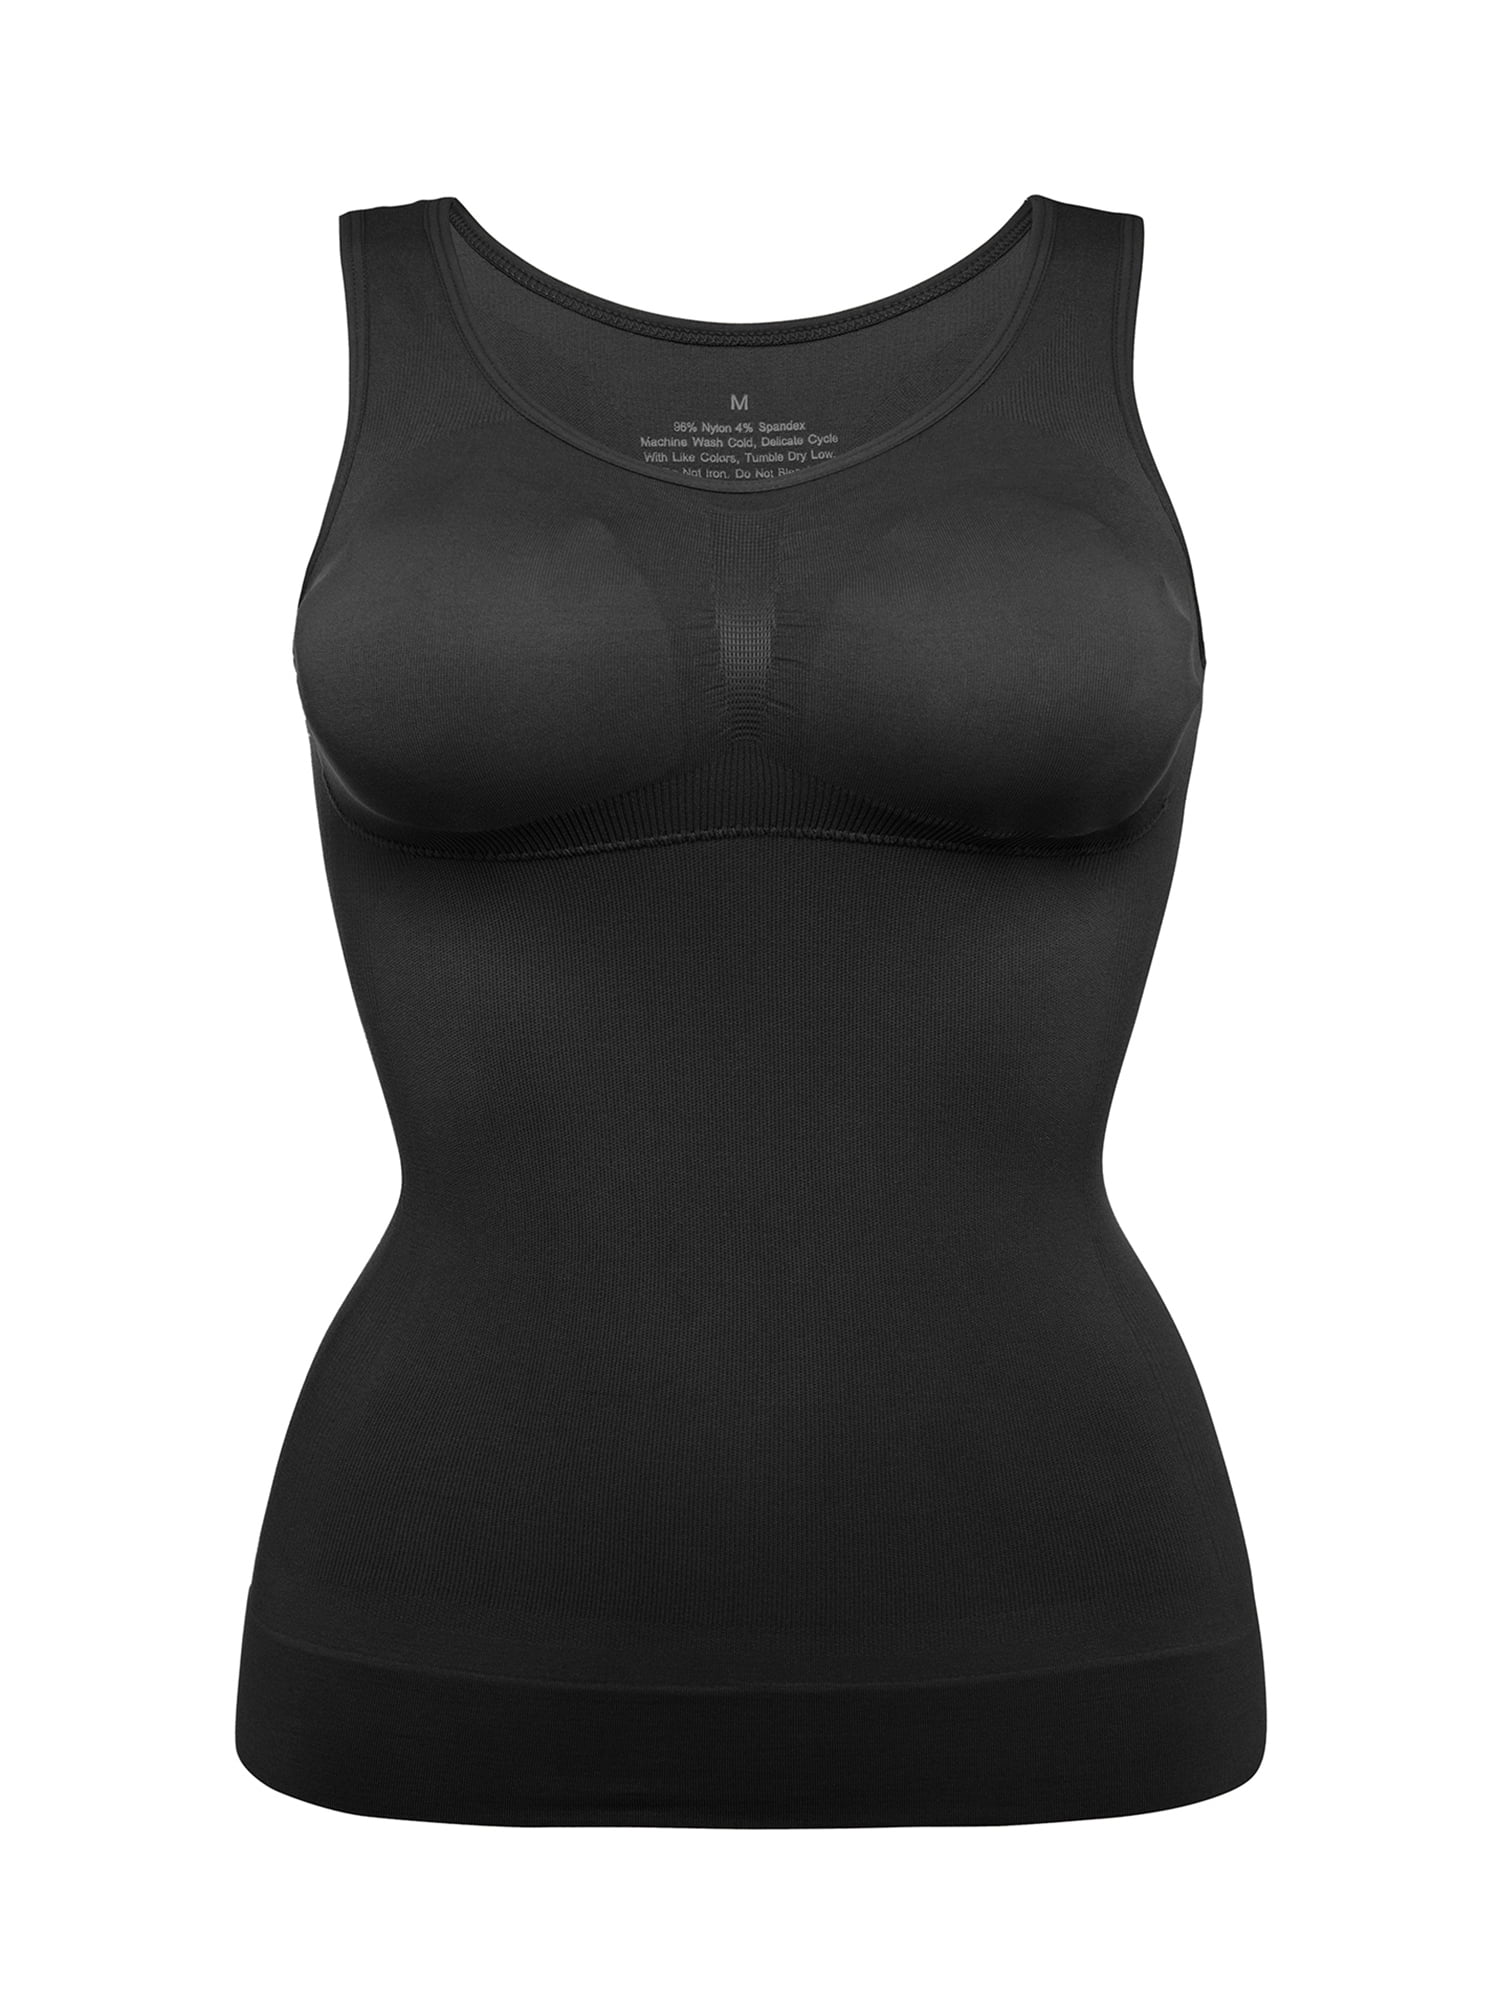 Joyshaper Women Shapewear Tank Tops Tummy Control Compression Shapping Vest  Padded Bra Seamless Undershirt White S 